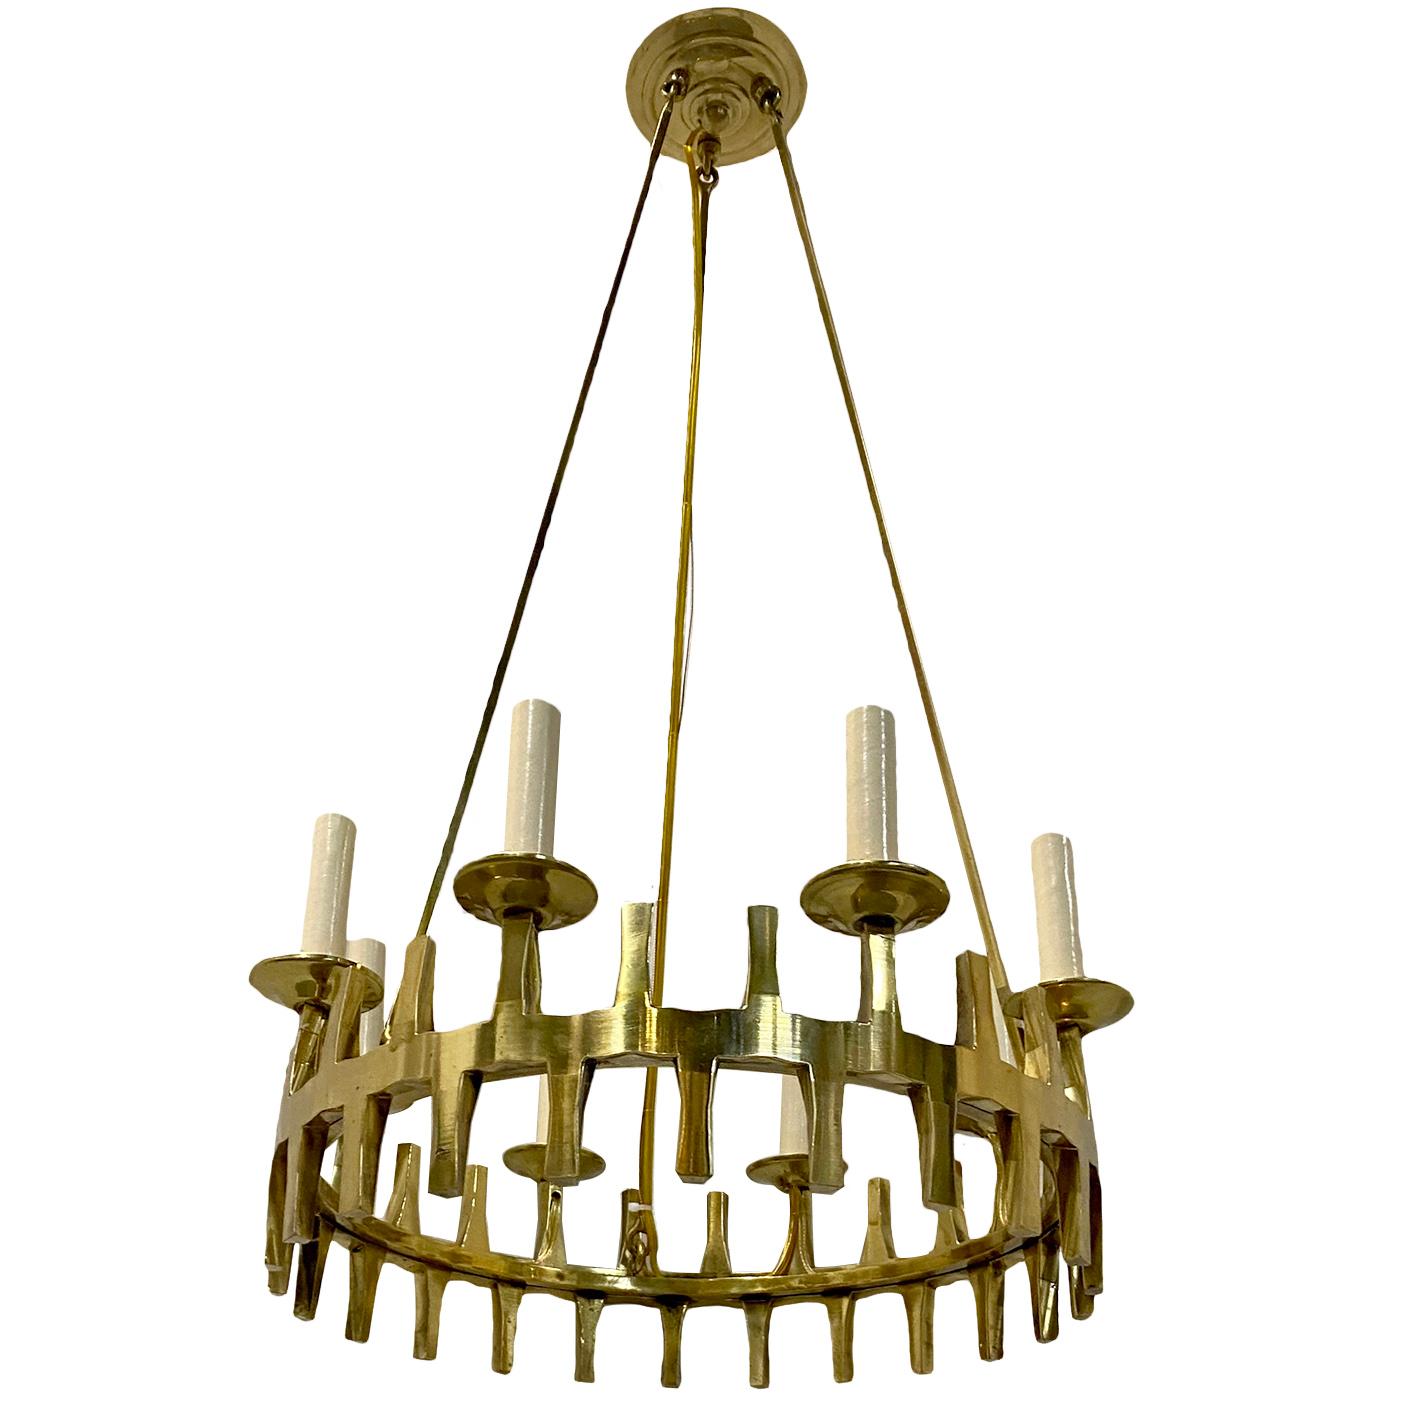 A circa 1950's Italian bronze chandelier with 8 lights.

Measurements:
Drop: 33